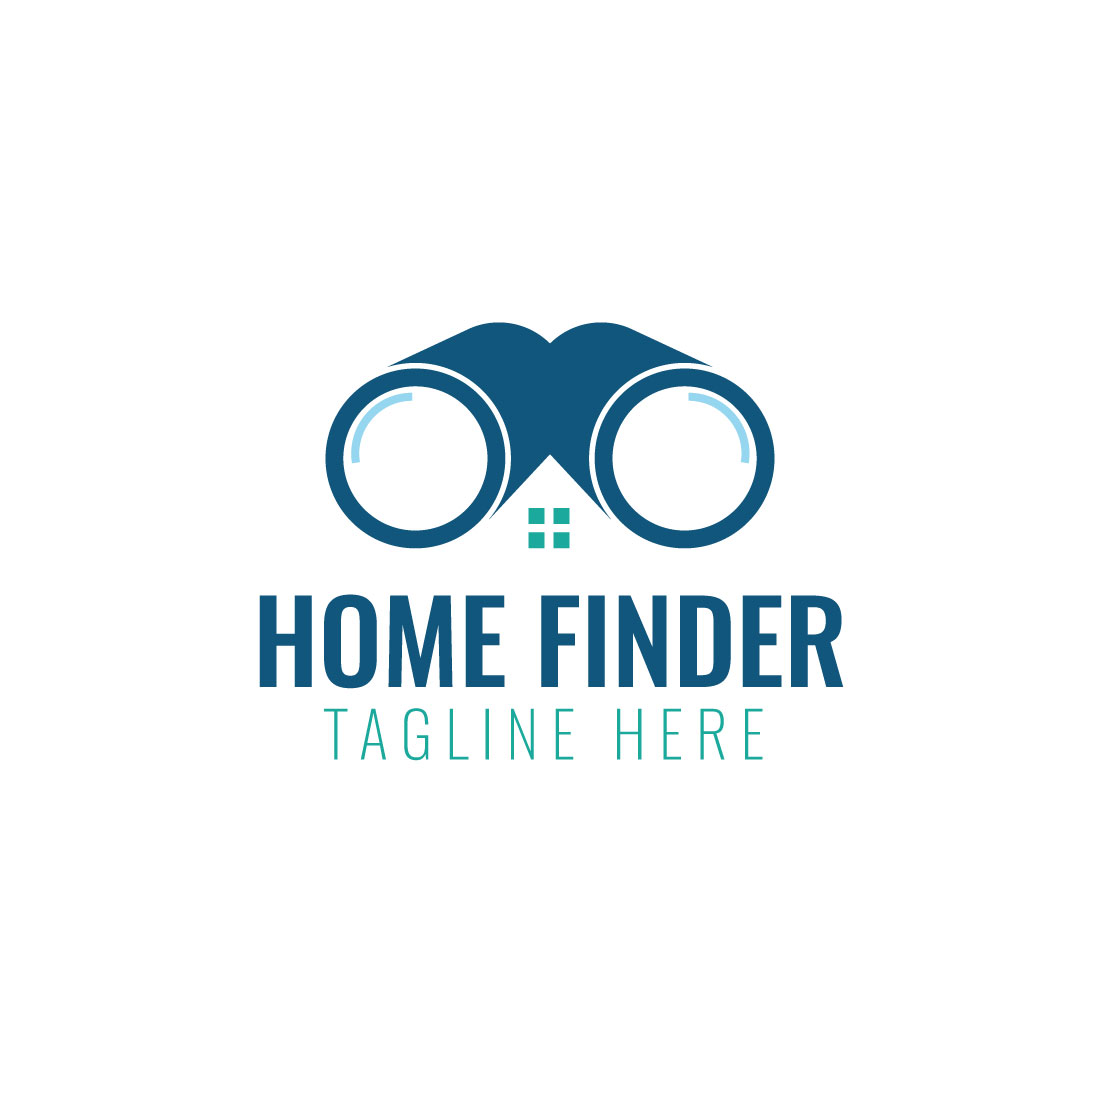 Home Finder Logo preview image.